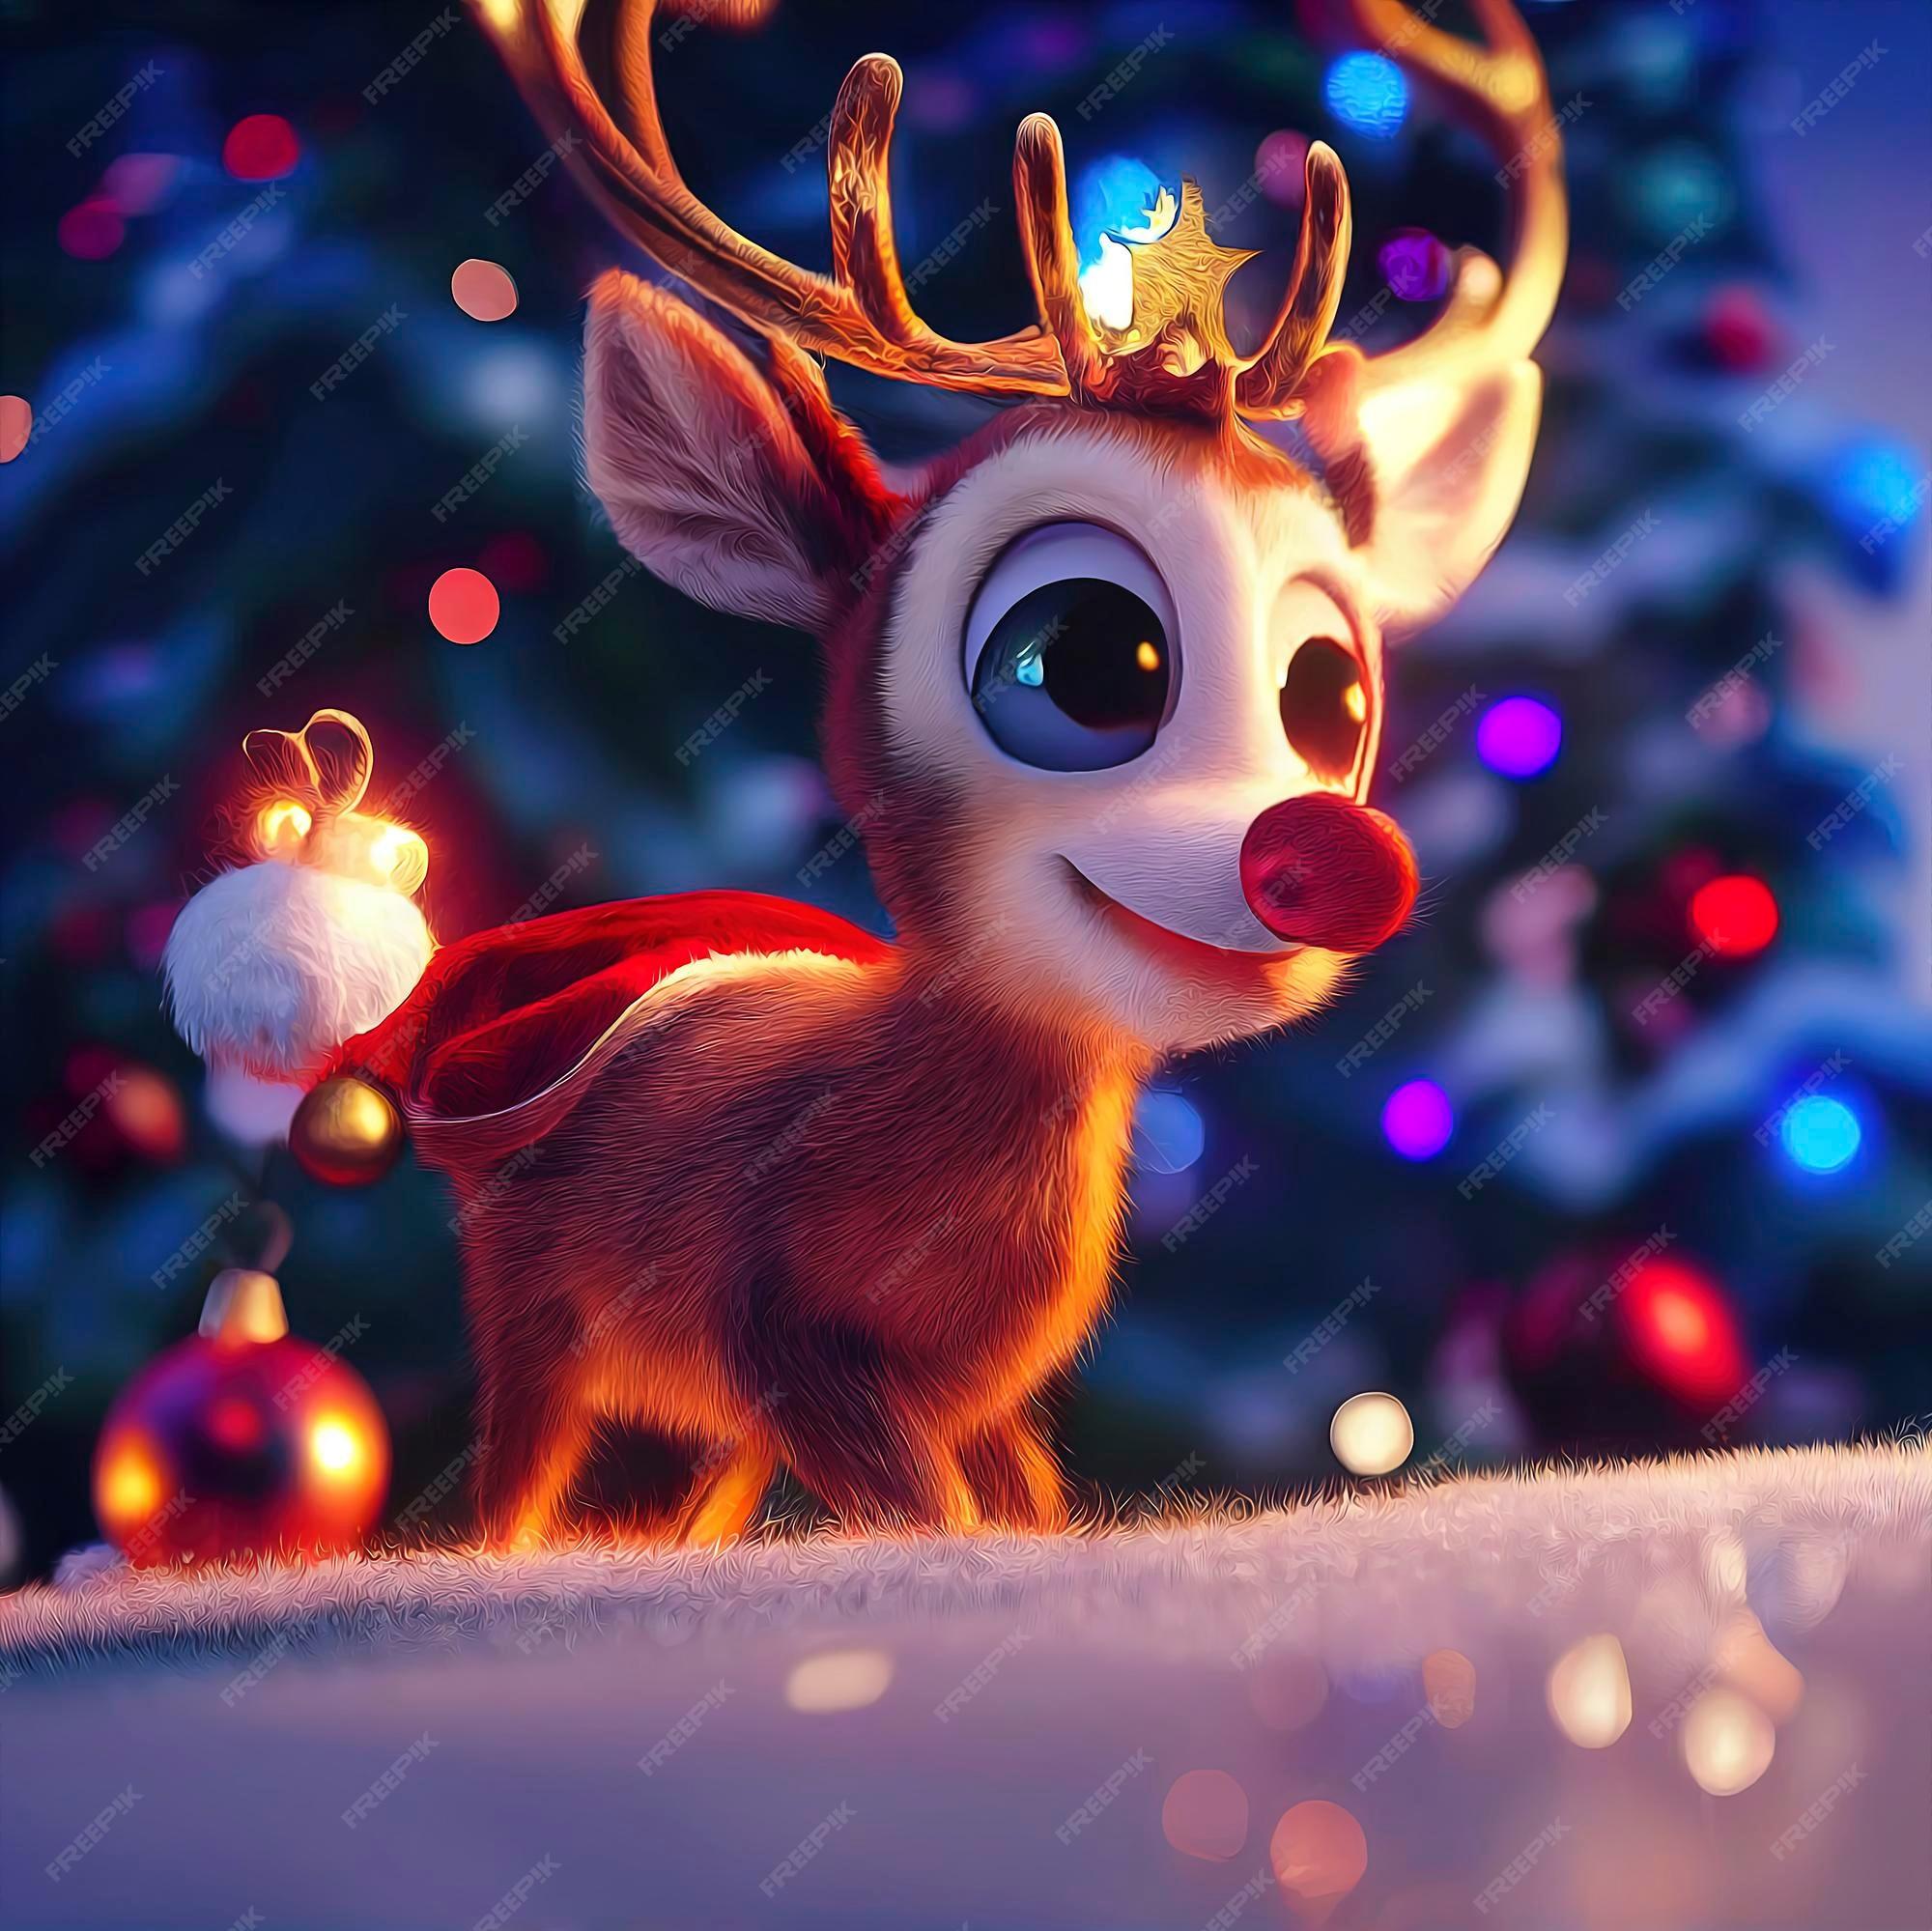 Premium Photo Cute Reindeer In Christmas Landscape